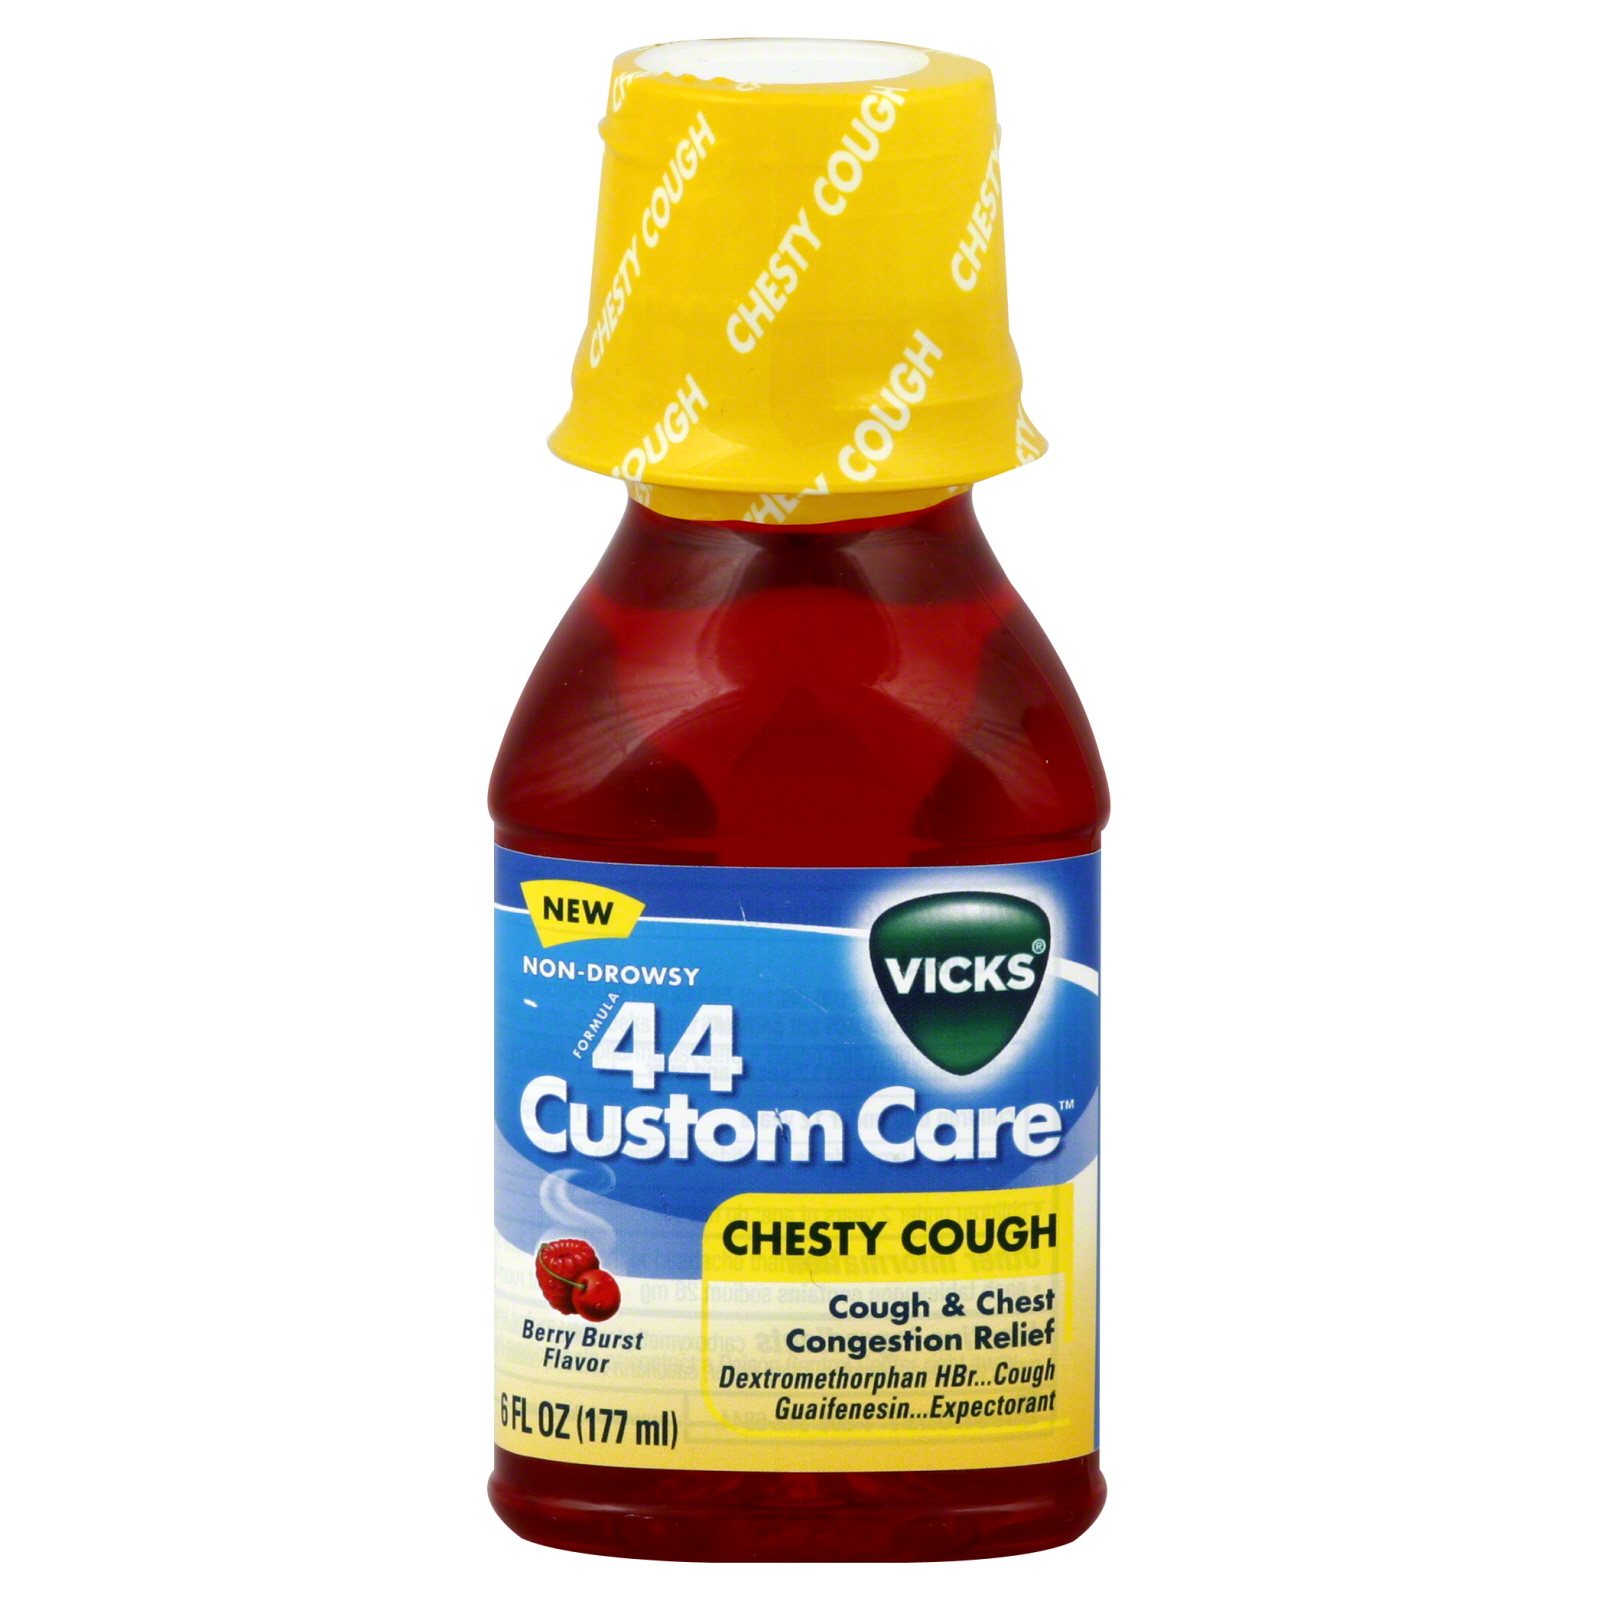 Vicks Formula 44 Custom Care Chesty Cough, Non-Drowsy, Berry Burst Flavor, 6 fl oz (177 ml)